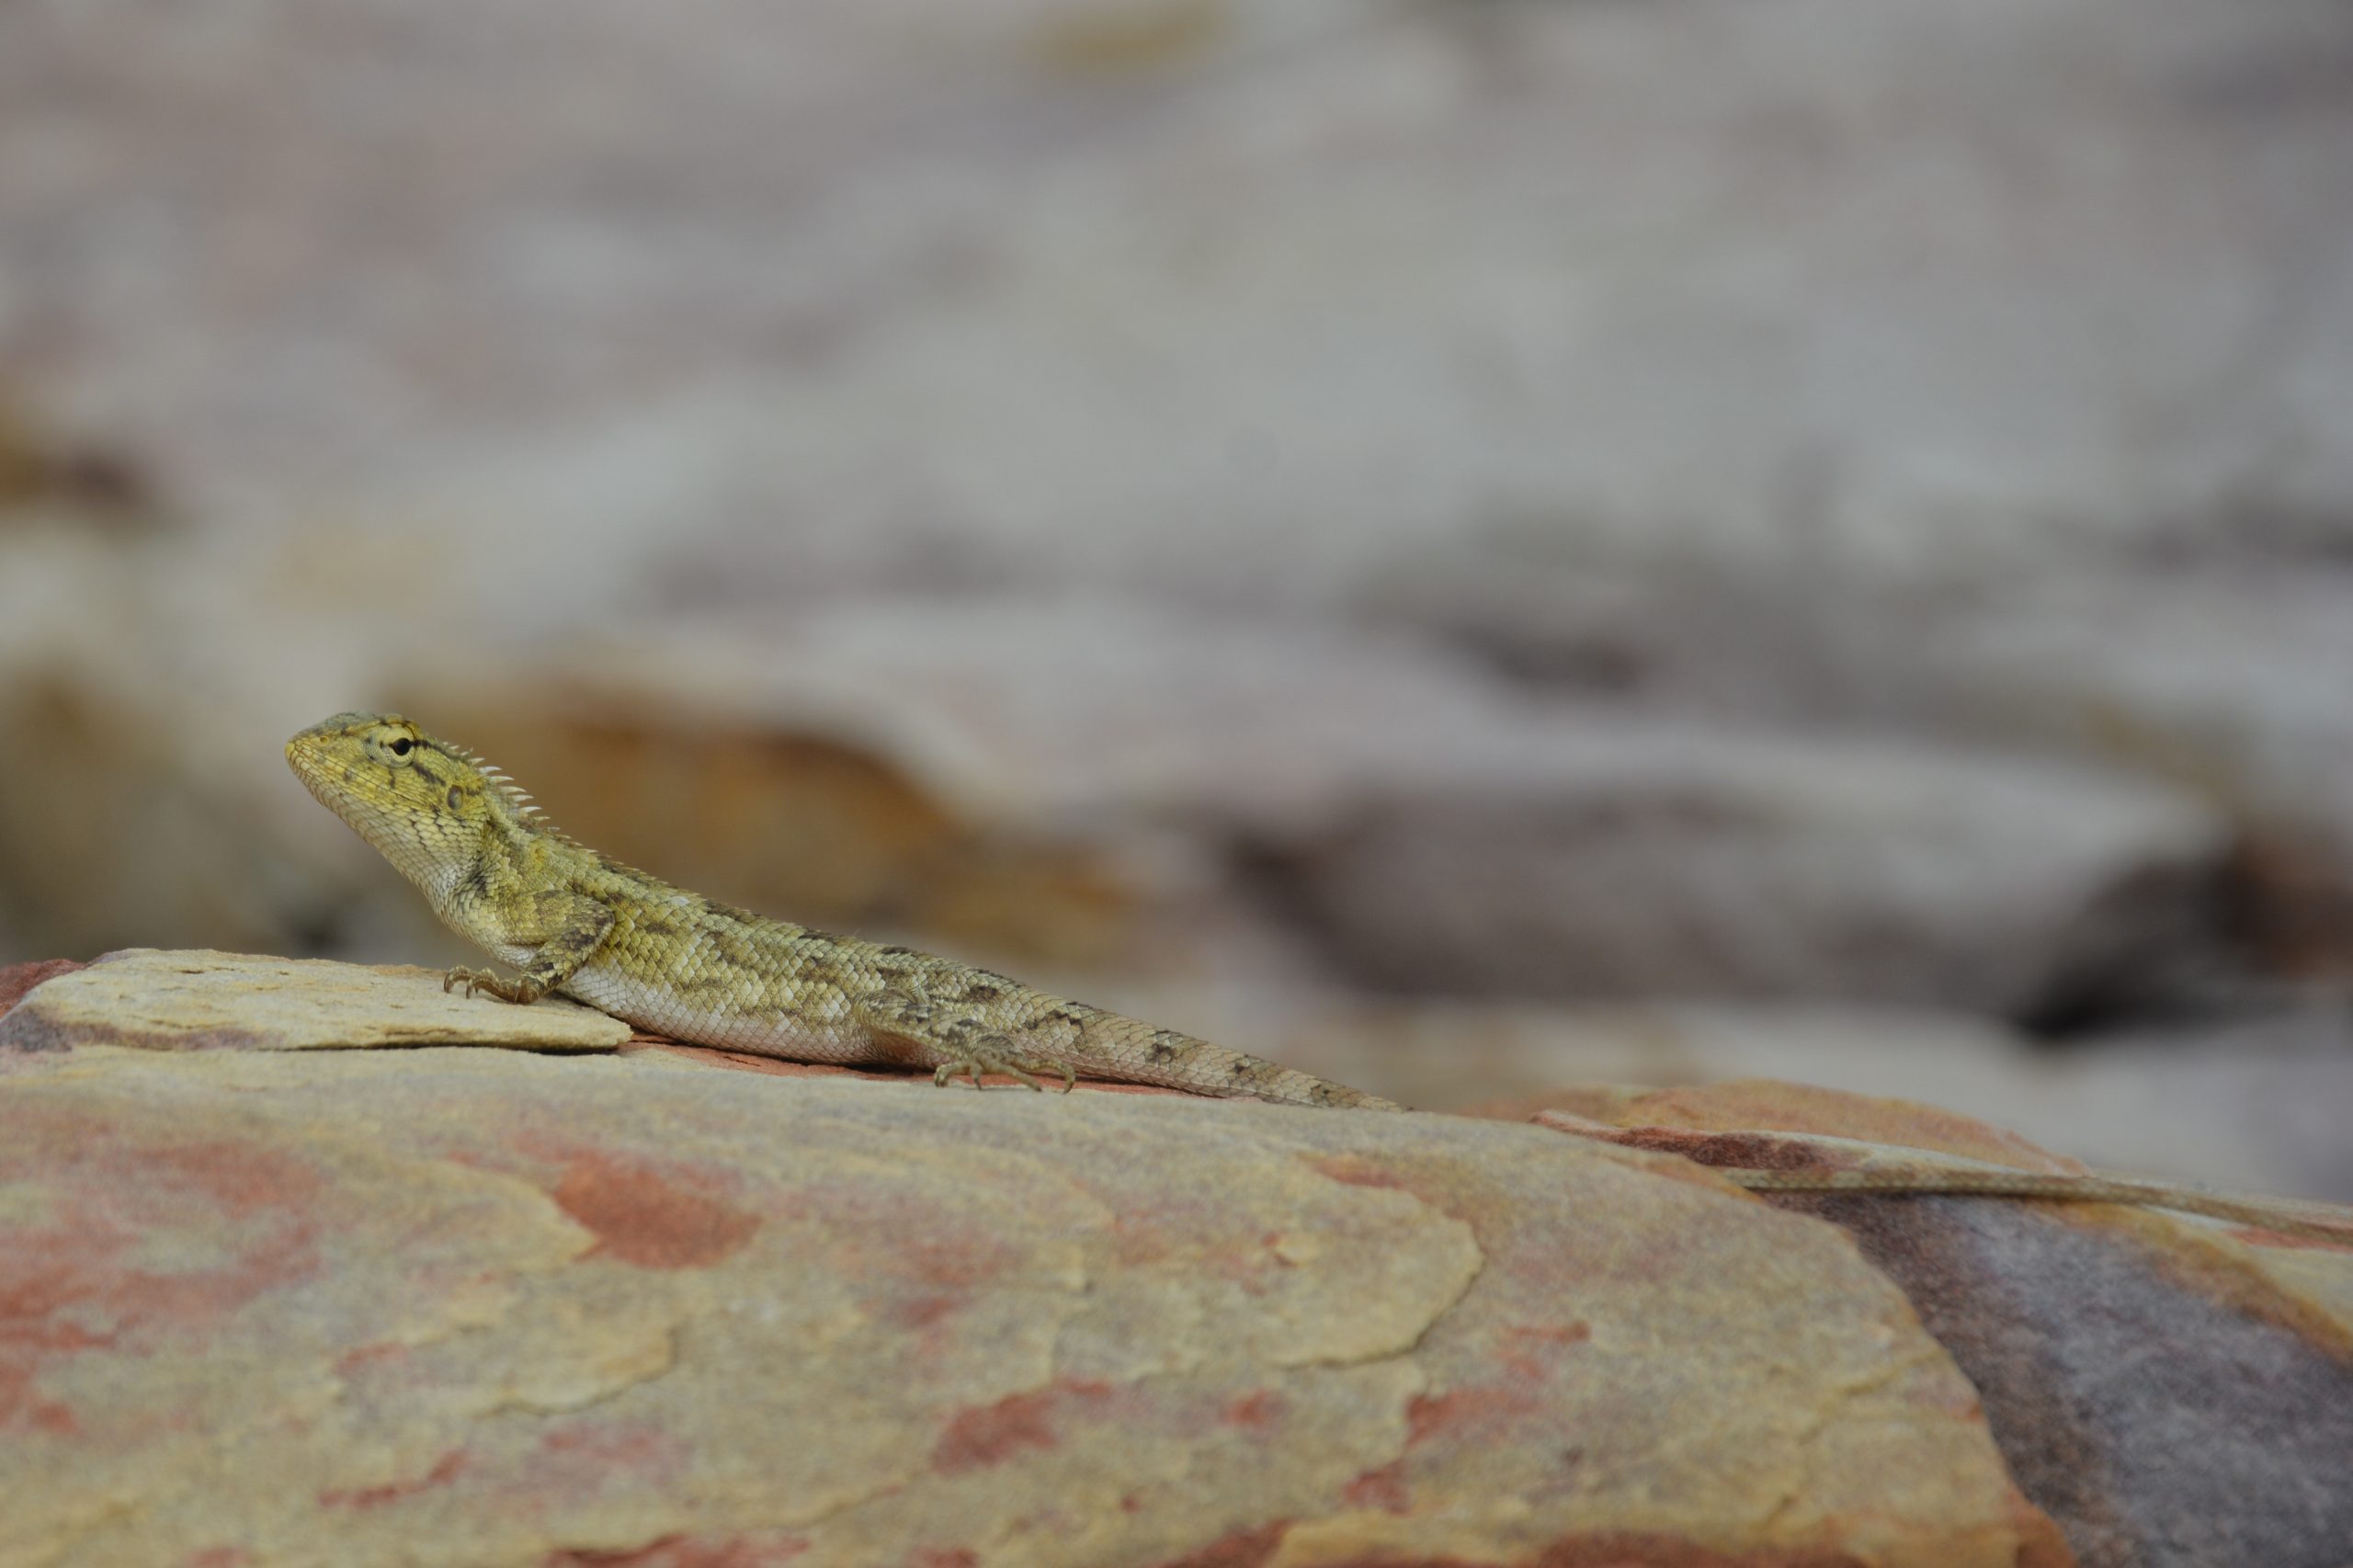 A lizard on a stone